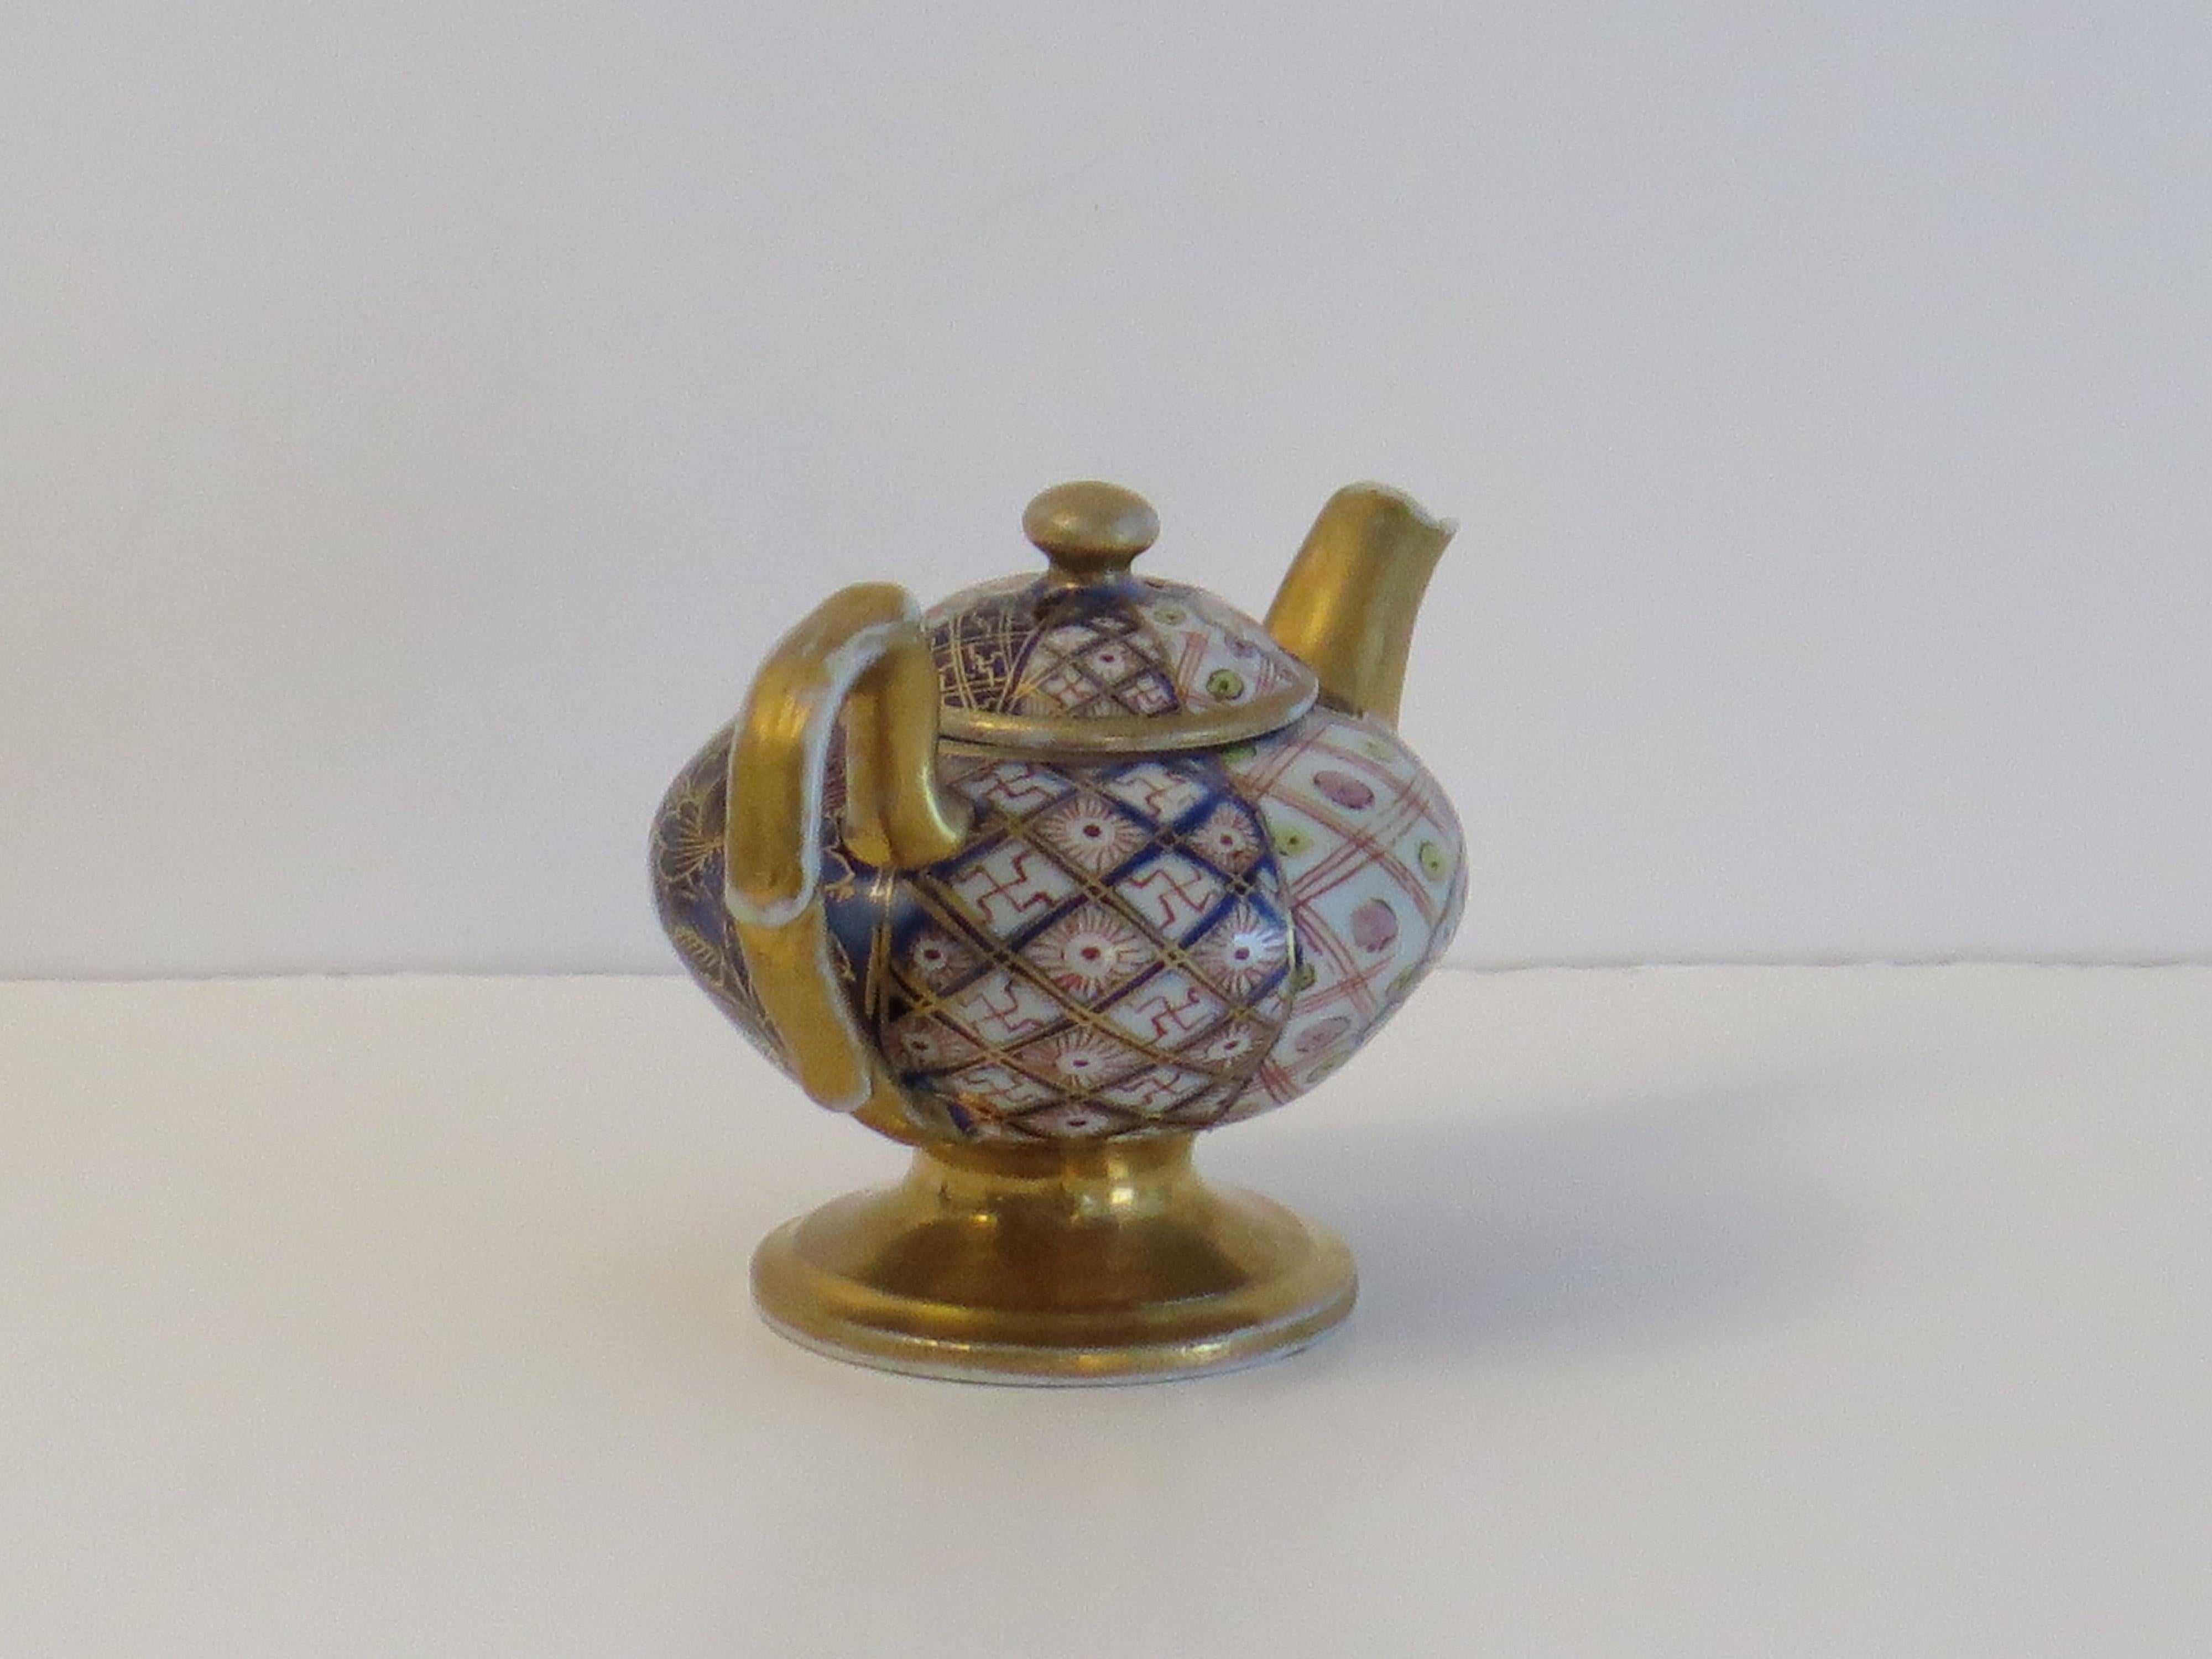 Rare Mason's Ironstone Miniature Teapot in Plaid Japan rare Pattern, circa 1820 For Sale 7